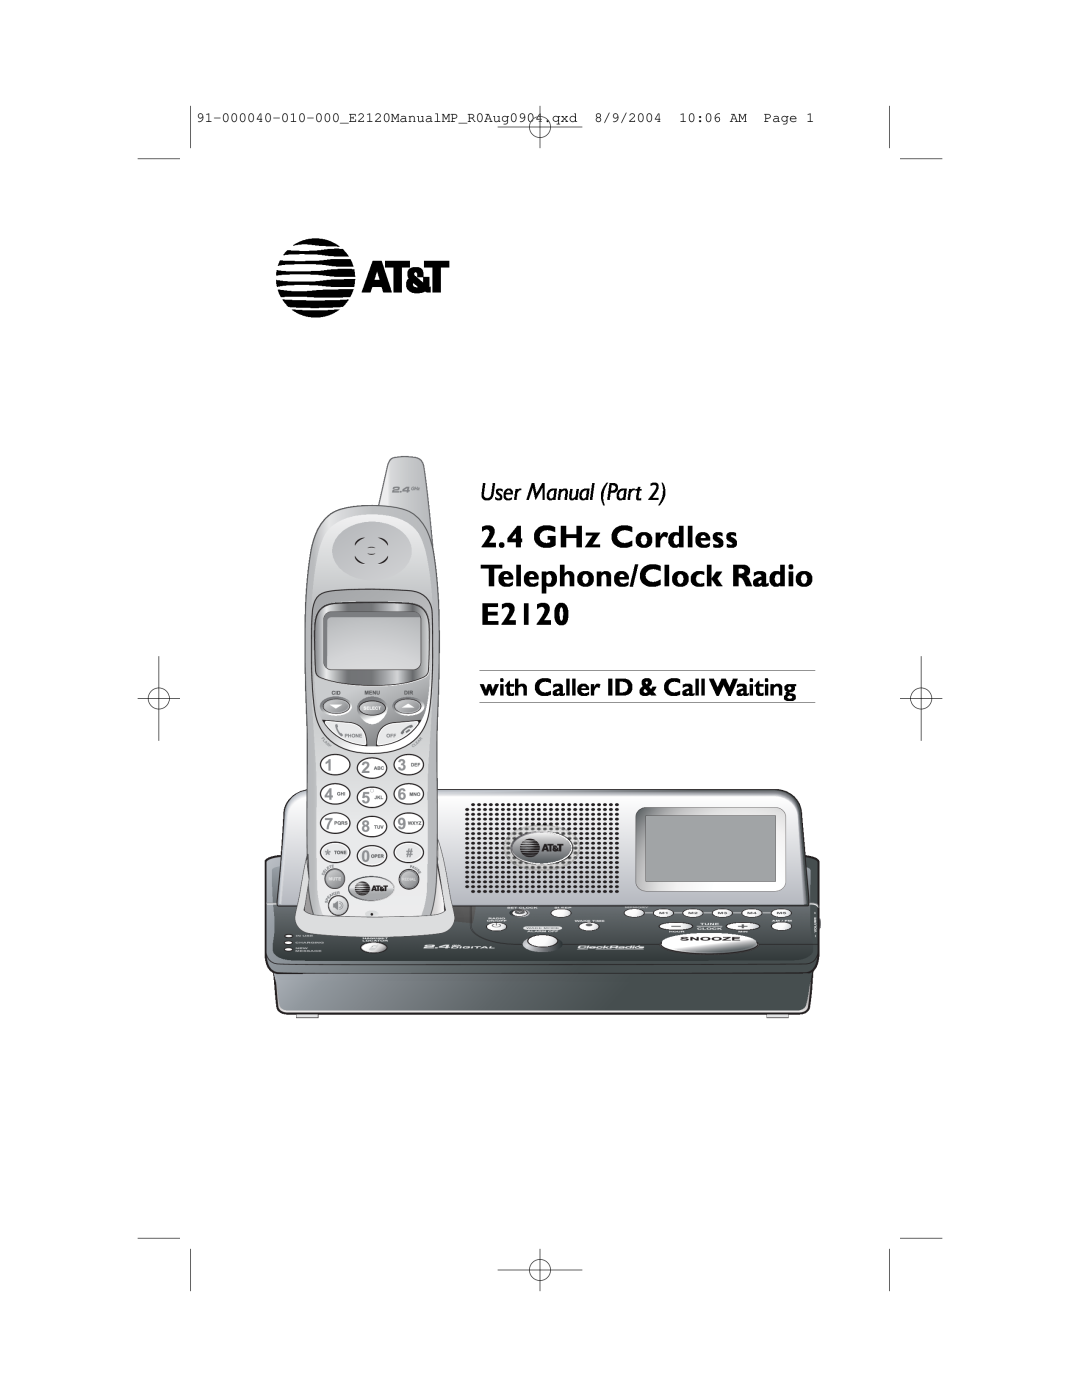 AT&T ATT-E2120 user manual GHz Cordless Telephone/Clock Radio E2120, User Manual Part, with Caller ID & CallWaiting 